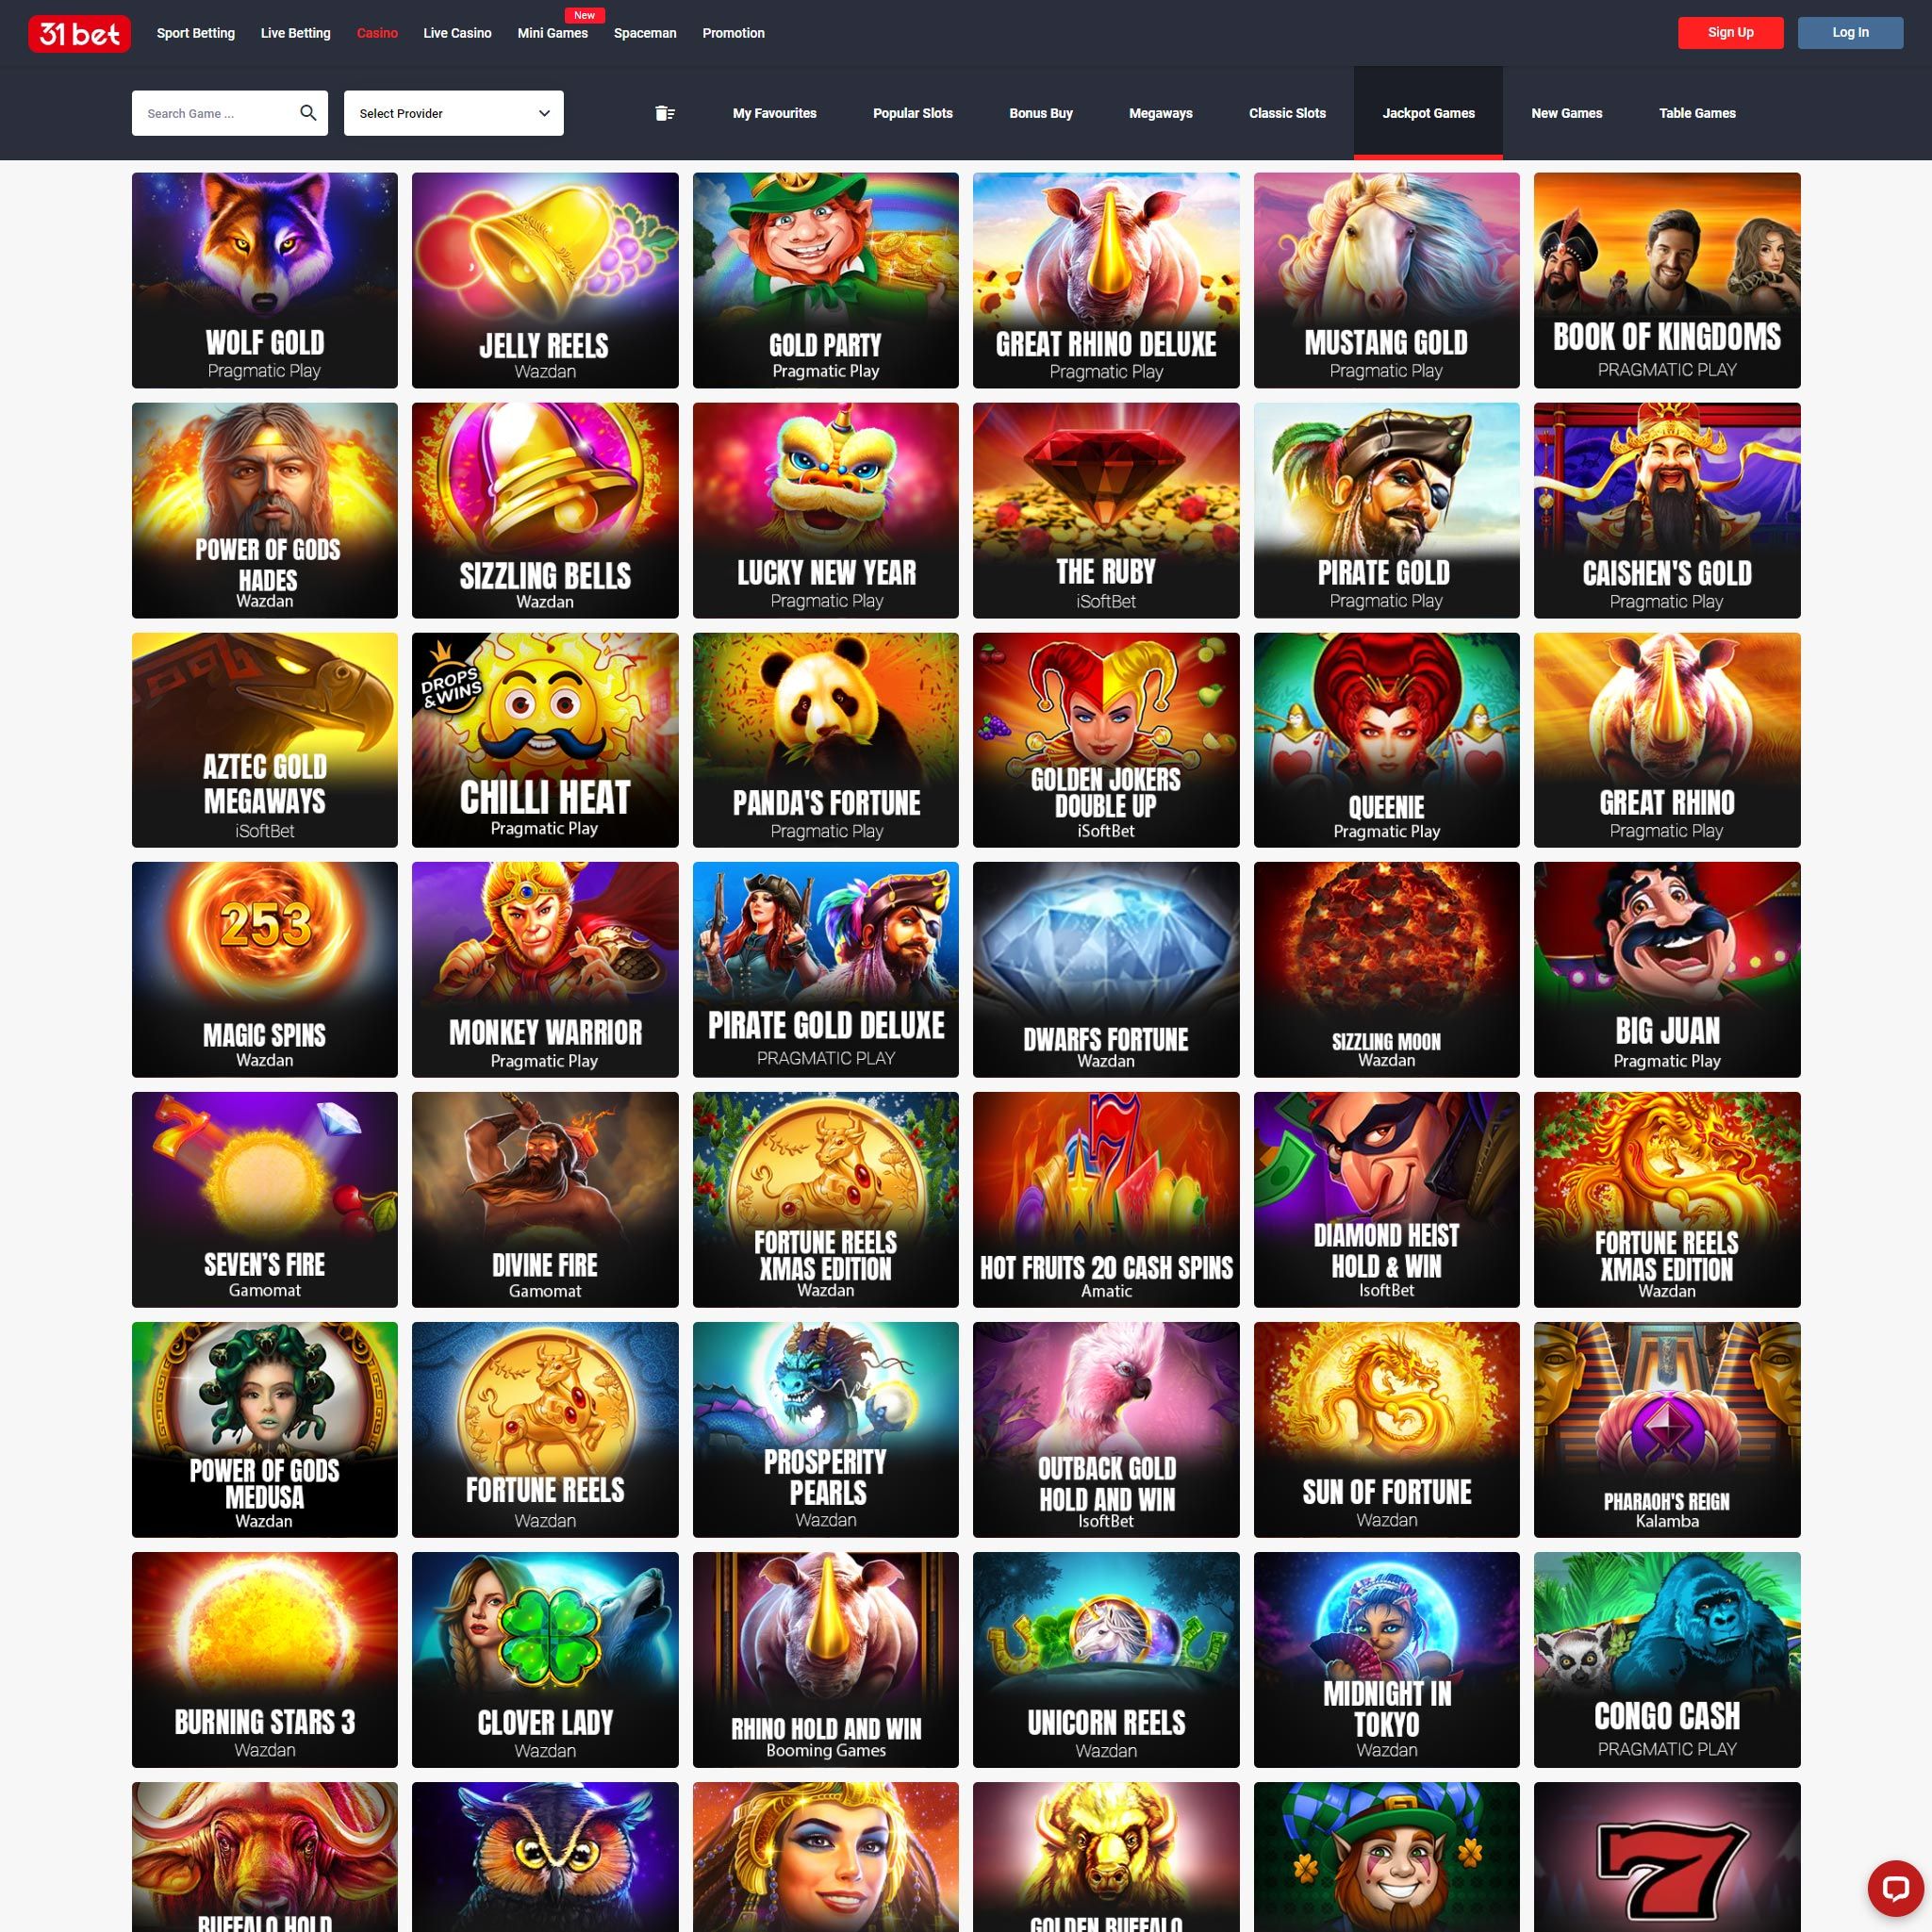 31Bet Casino full games catalogue